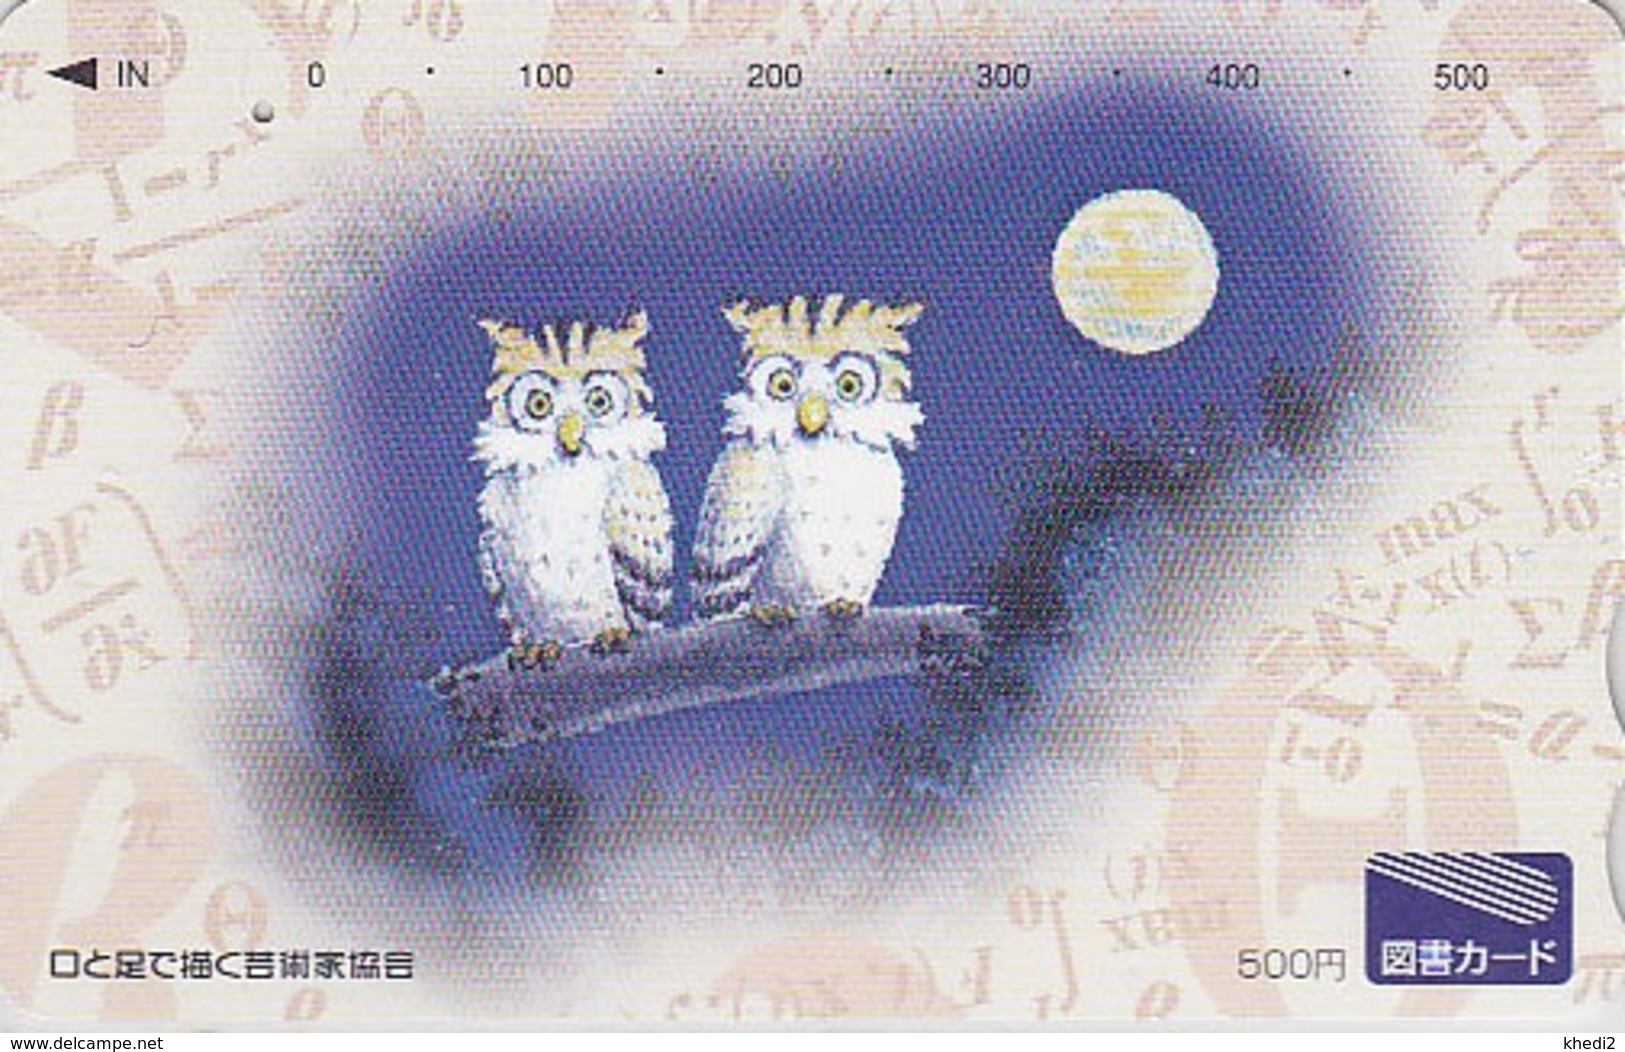 Carte Prépayée Japon - ANIMAL - OISEAU - HIBOU Chouette & Lune - OWL BIRD & Moon  - Japan Prepaid Tosho Card - 4298 - Uilen